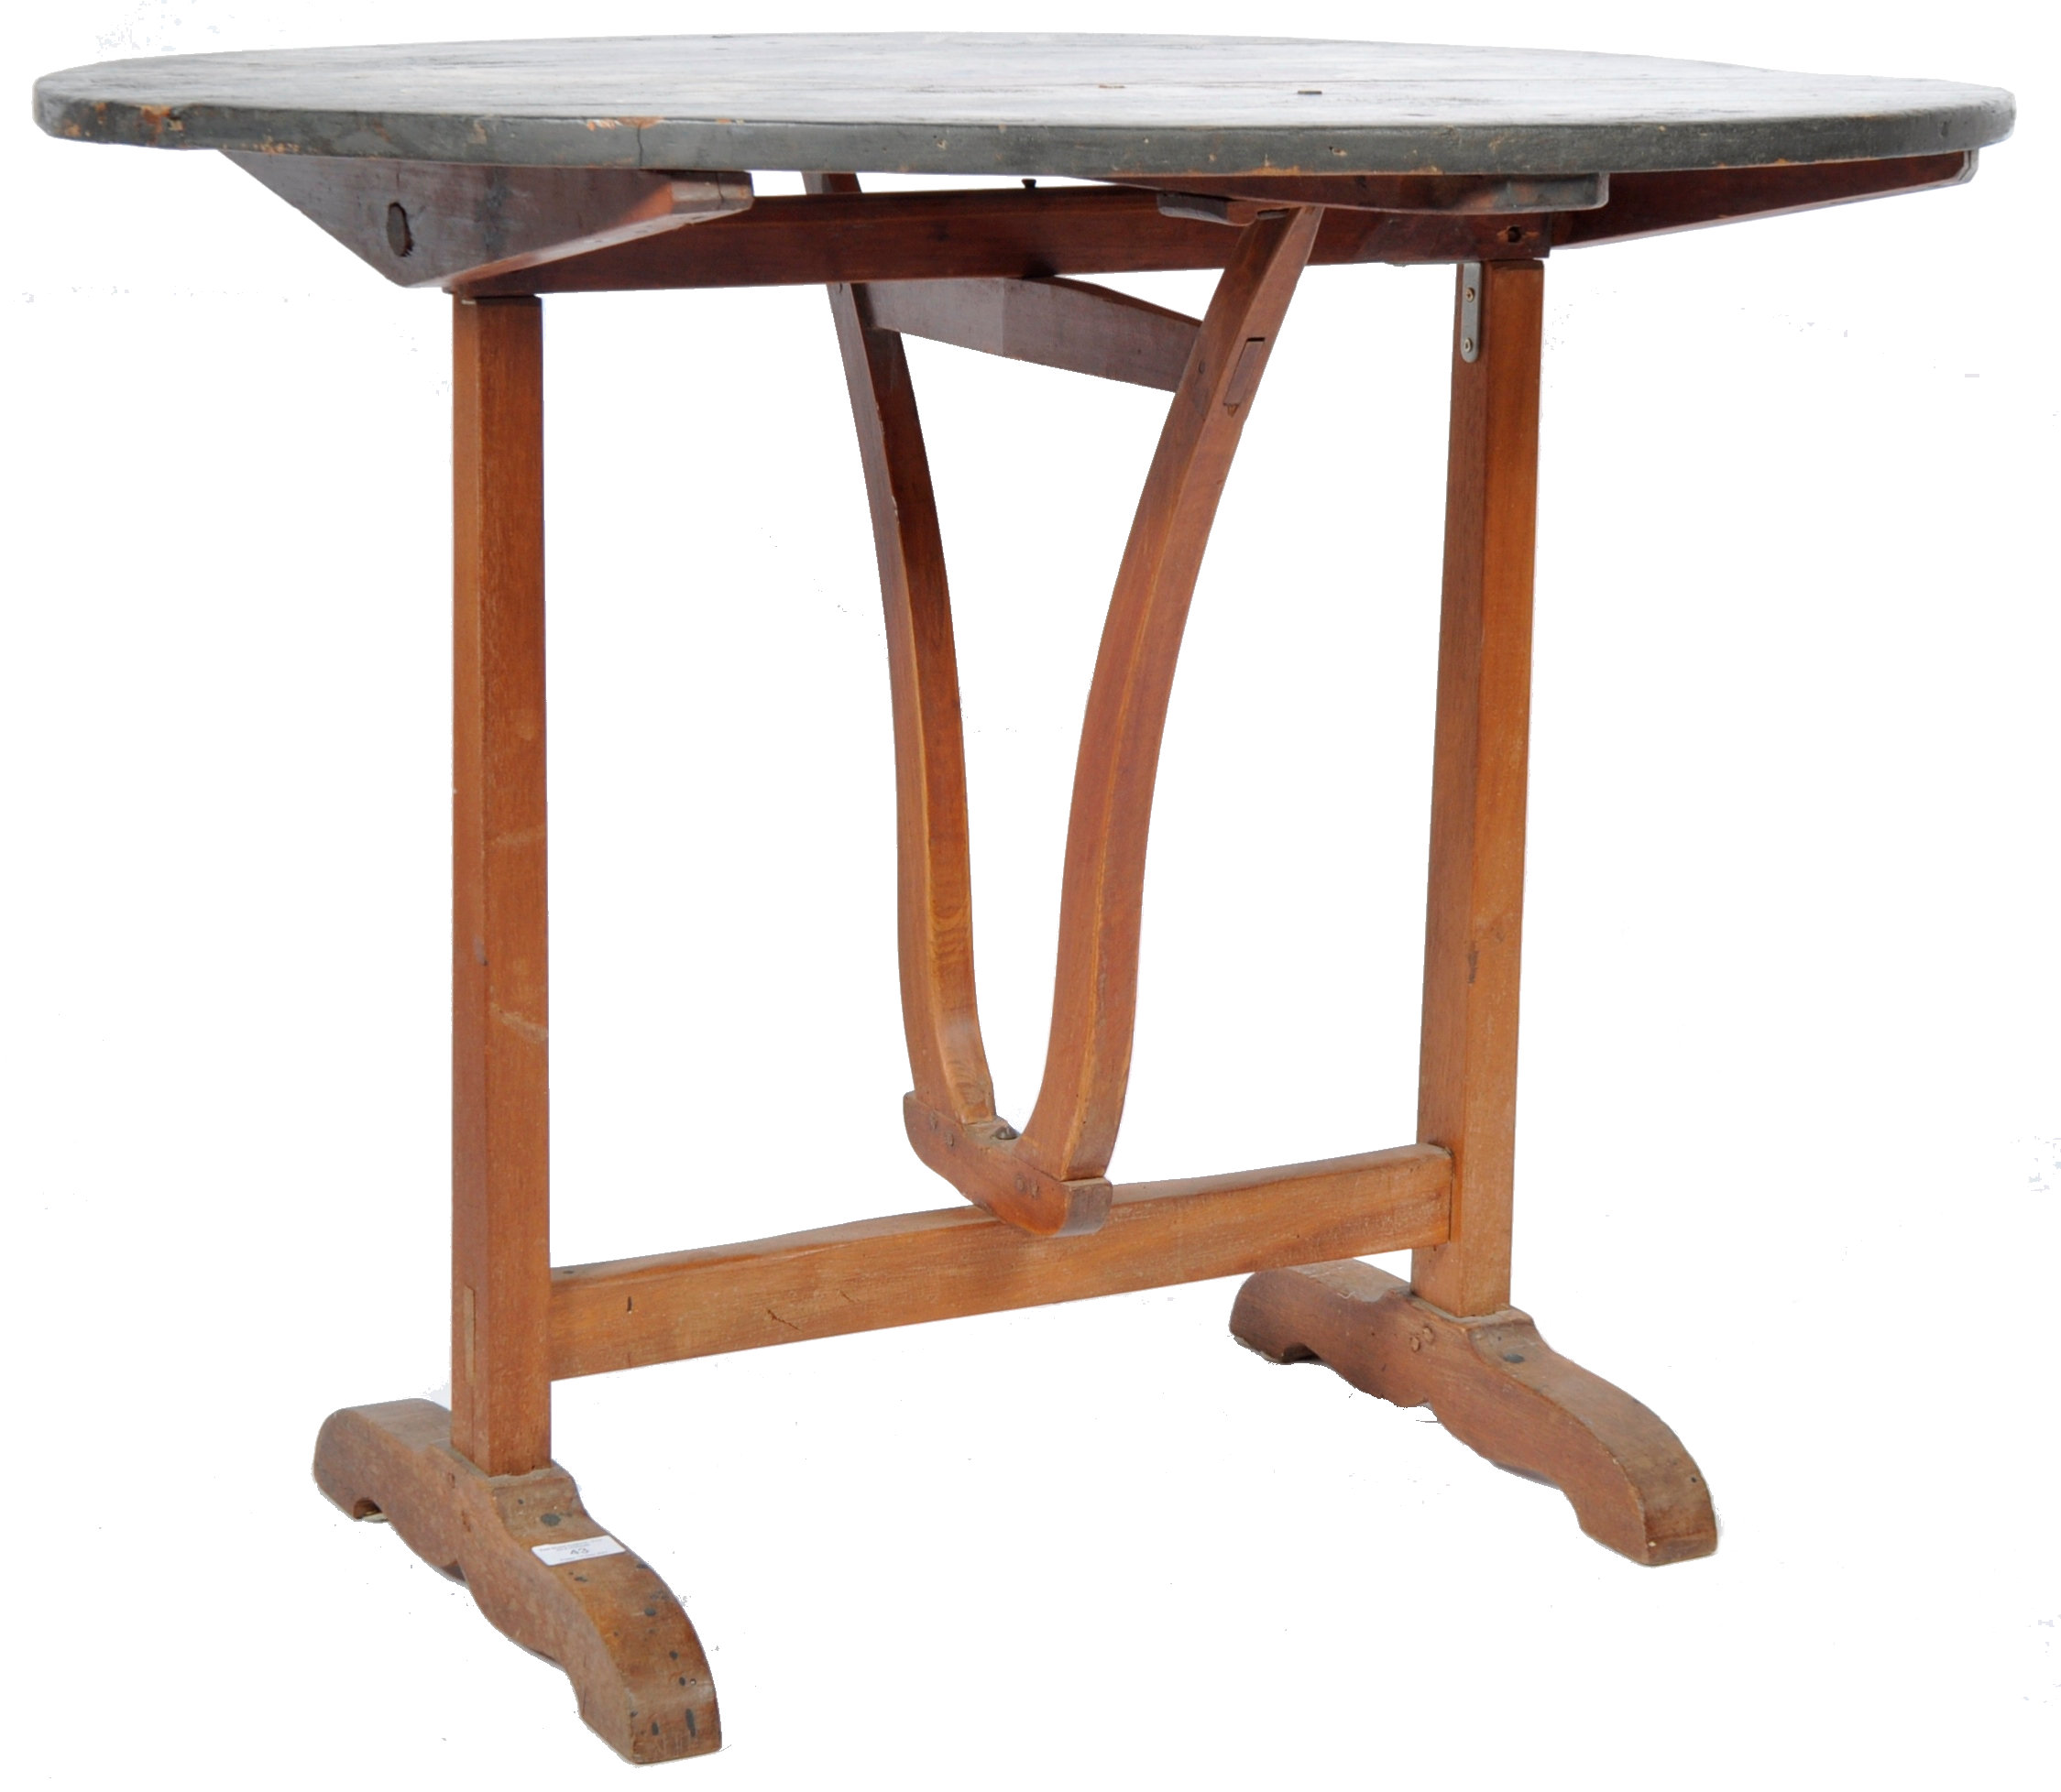 ANTIQUE 19TH CENTURY FRENCH PAINTED VENDANGE TABLE TABLE DE VIGNERON - Image 2 of 7